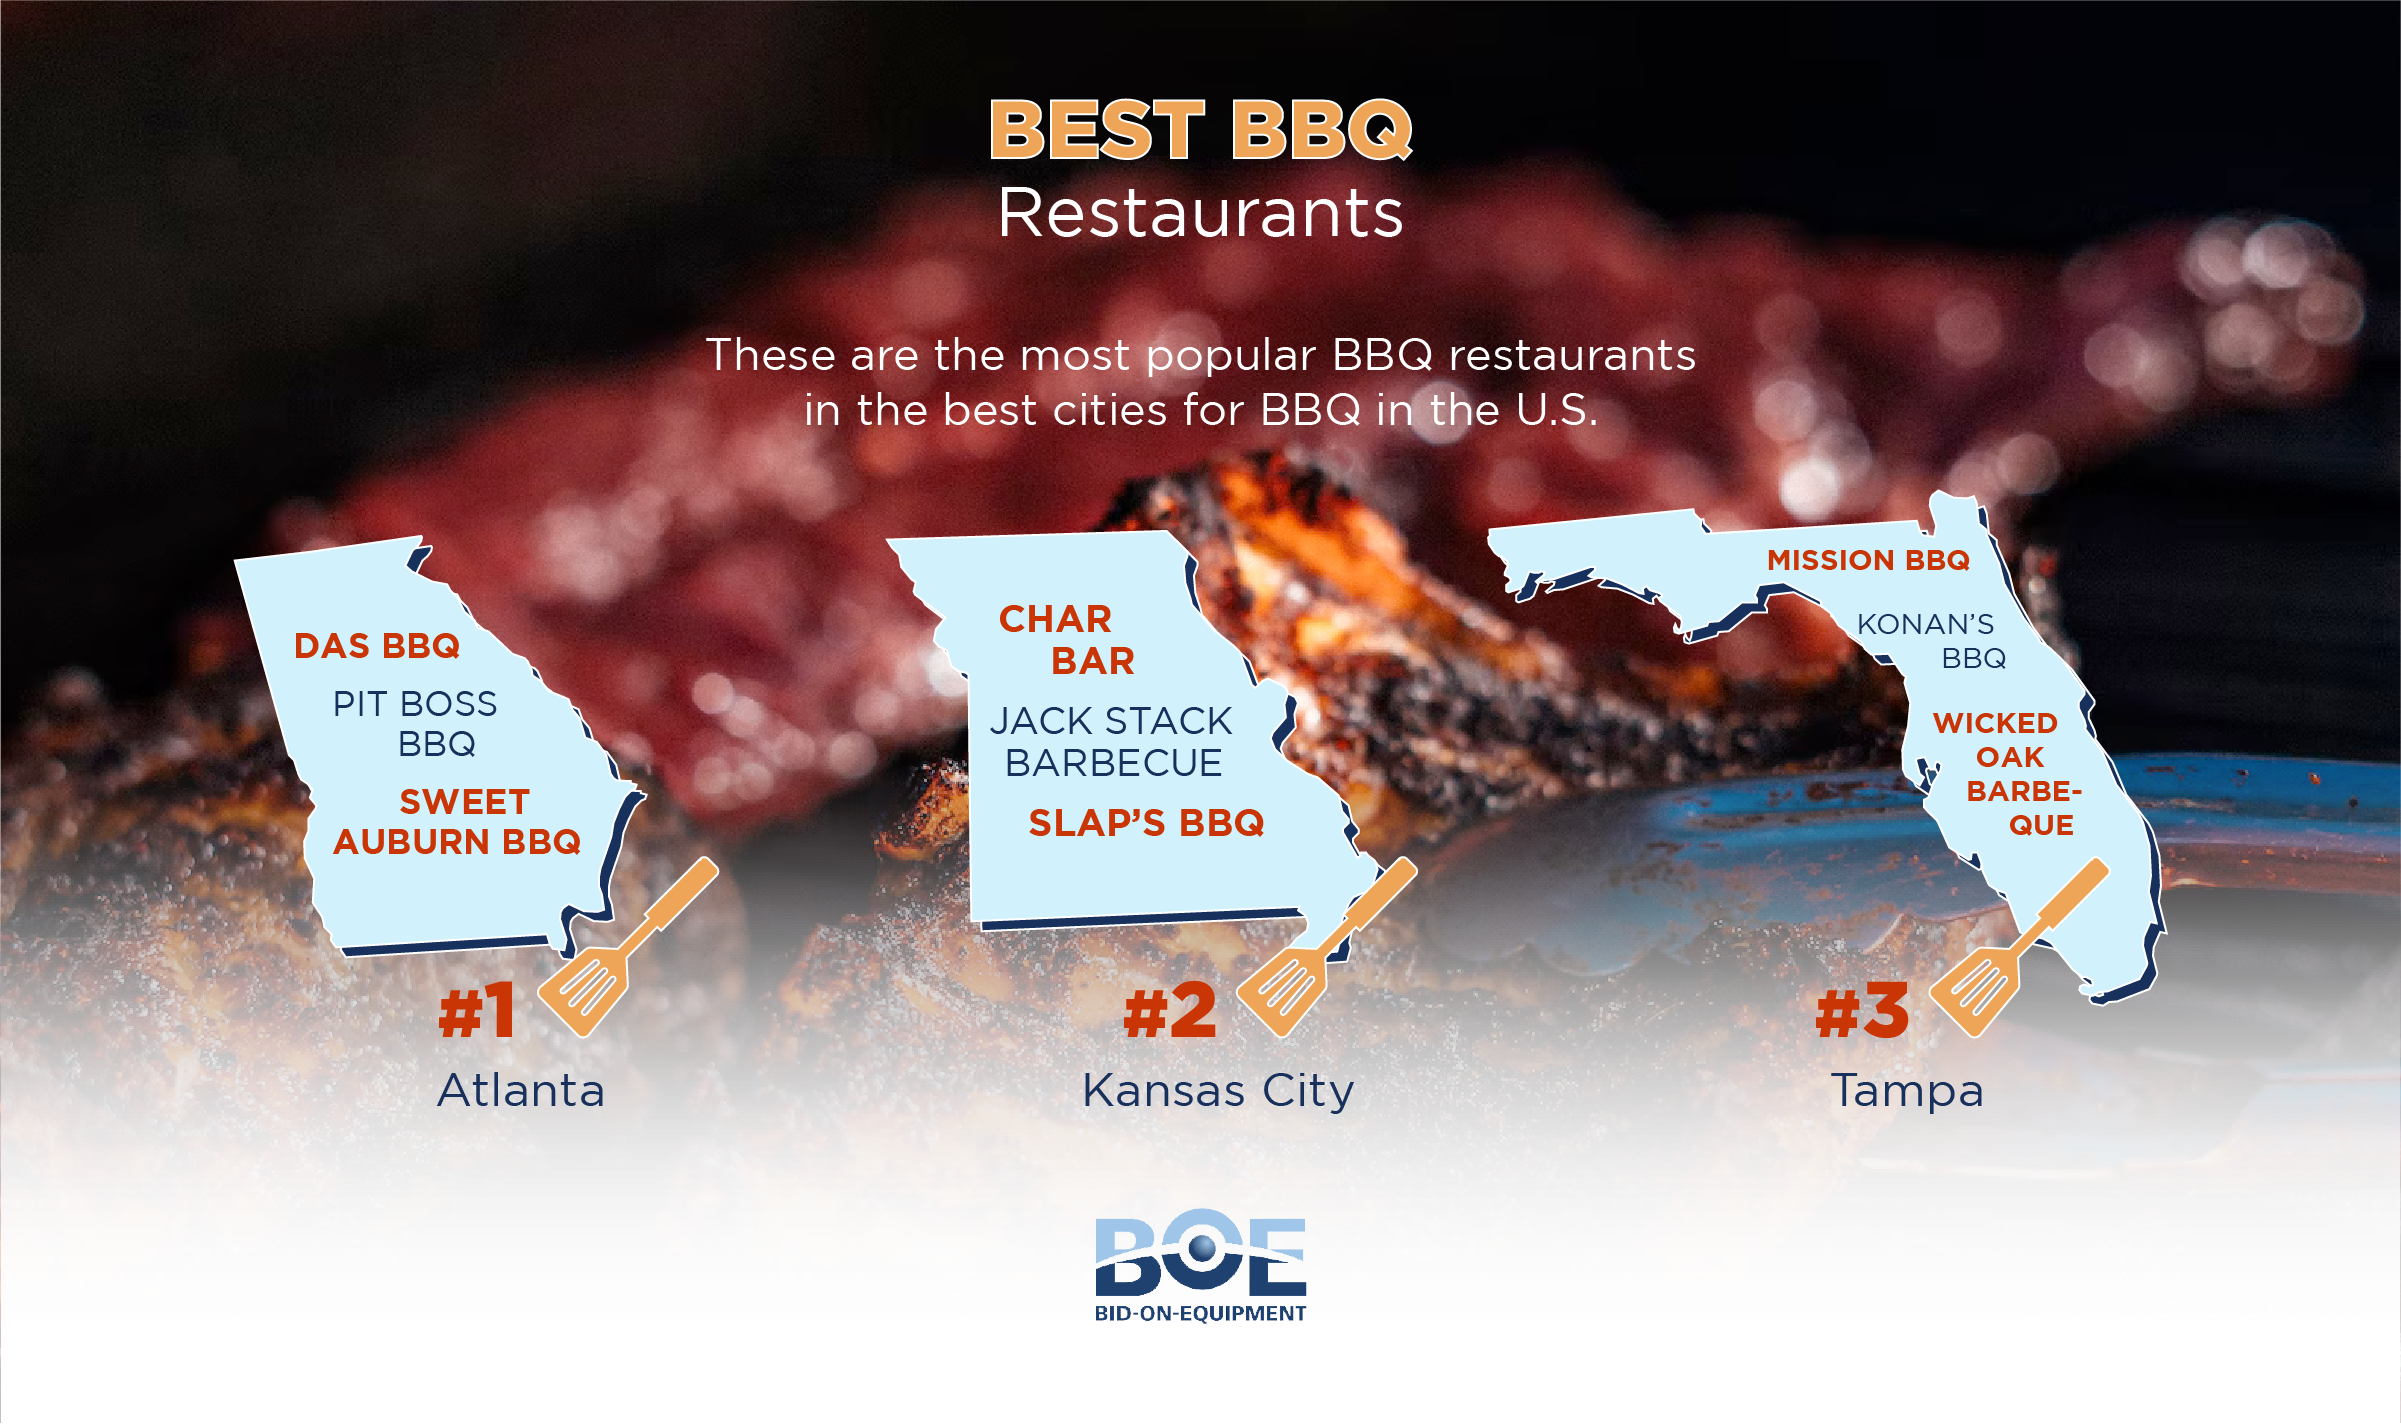 Most popular BBQ restaurants in Atlanta, Kansas City, and Tampa - report from bidonequipment.com